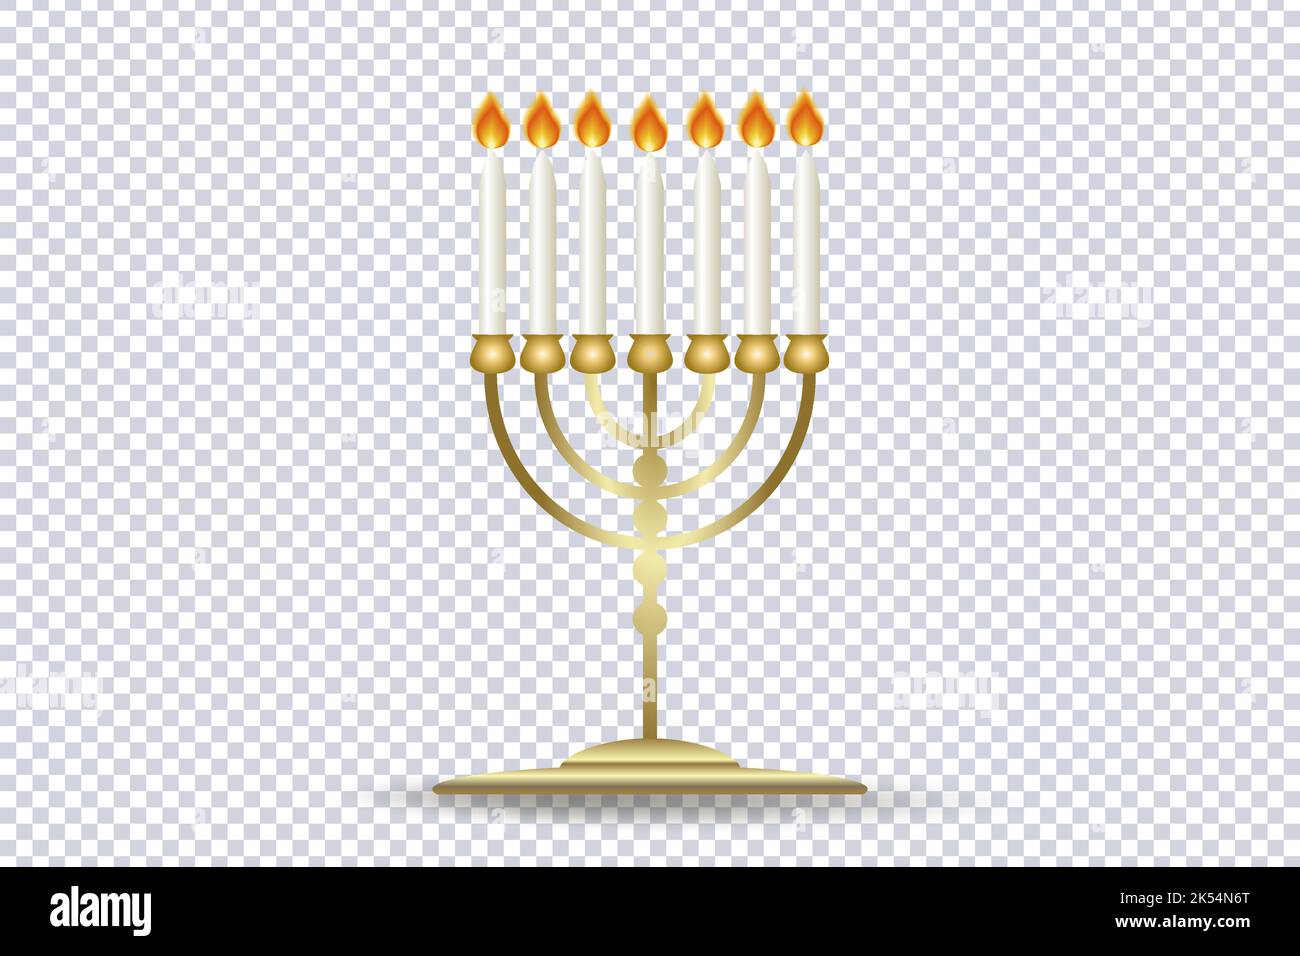 Golden Menorah icon. Traditional seven-branched Jewish candlestick. Hanukkah menorah with burning candles. Hanukkah candlestick with candles isolated Stock Vector